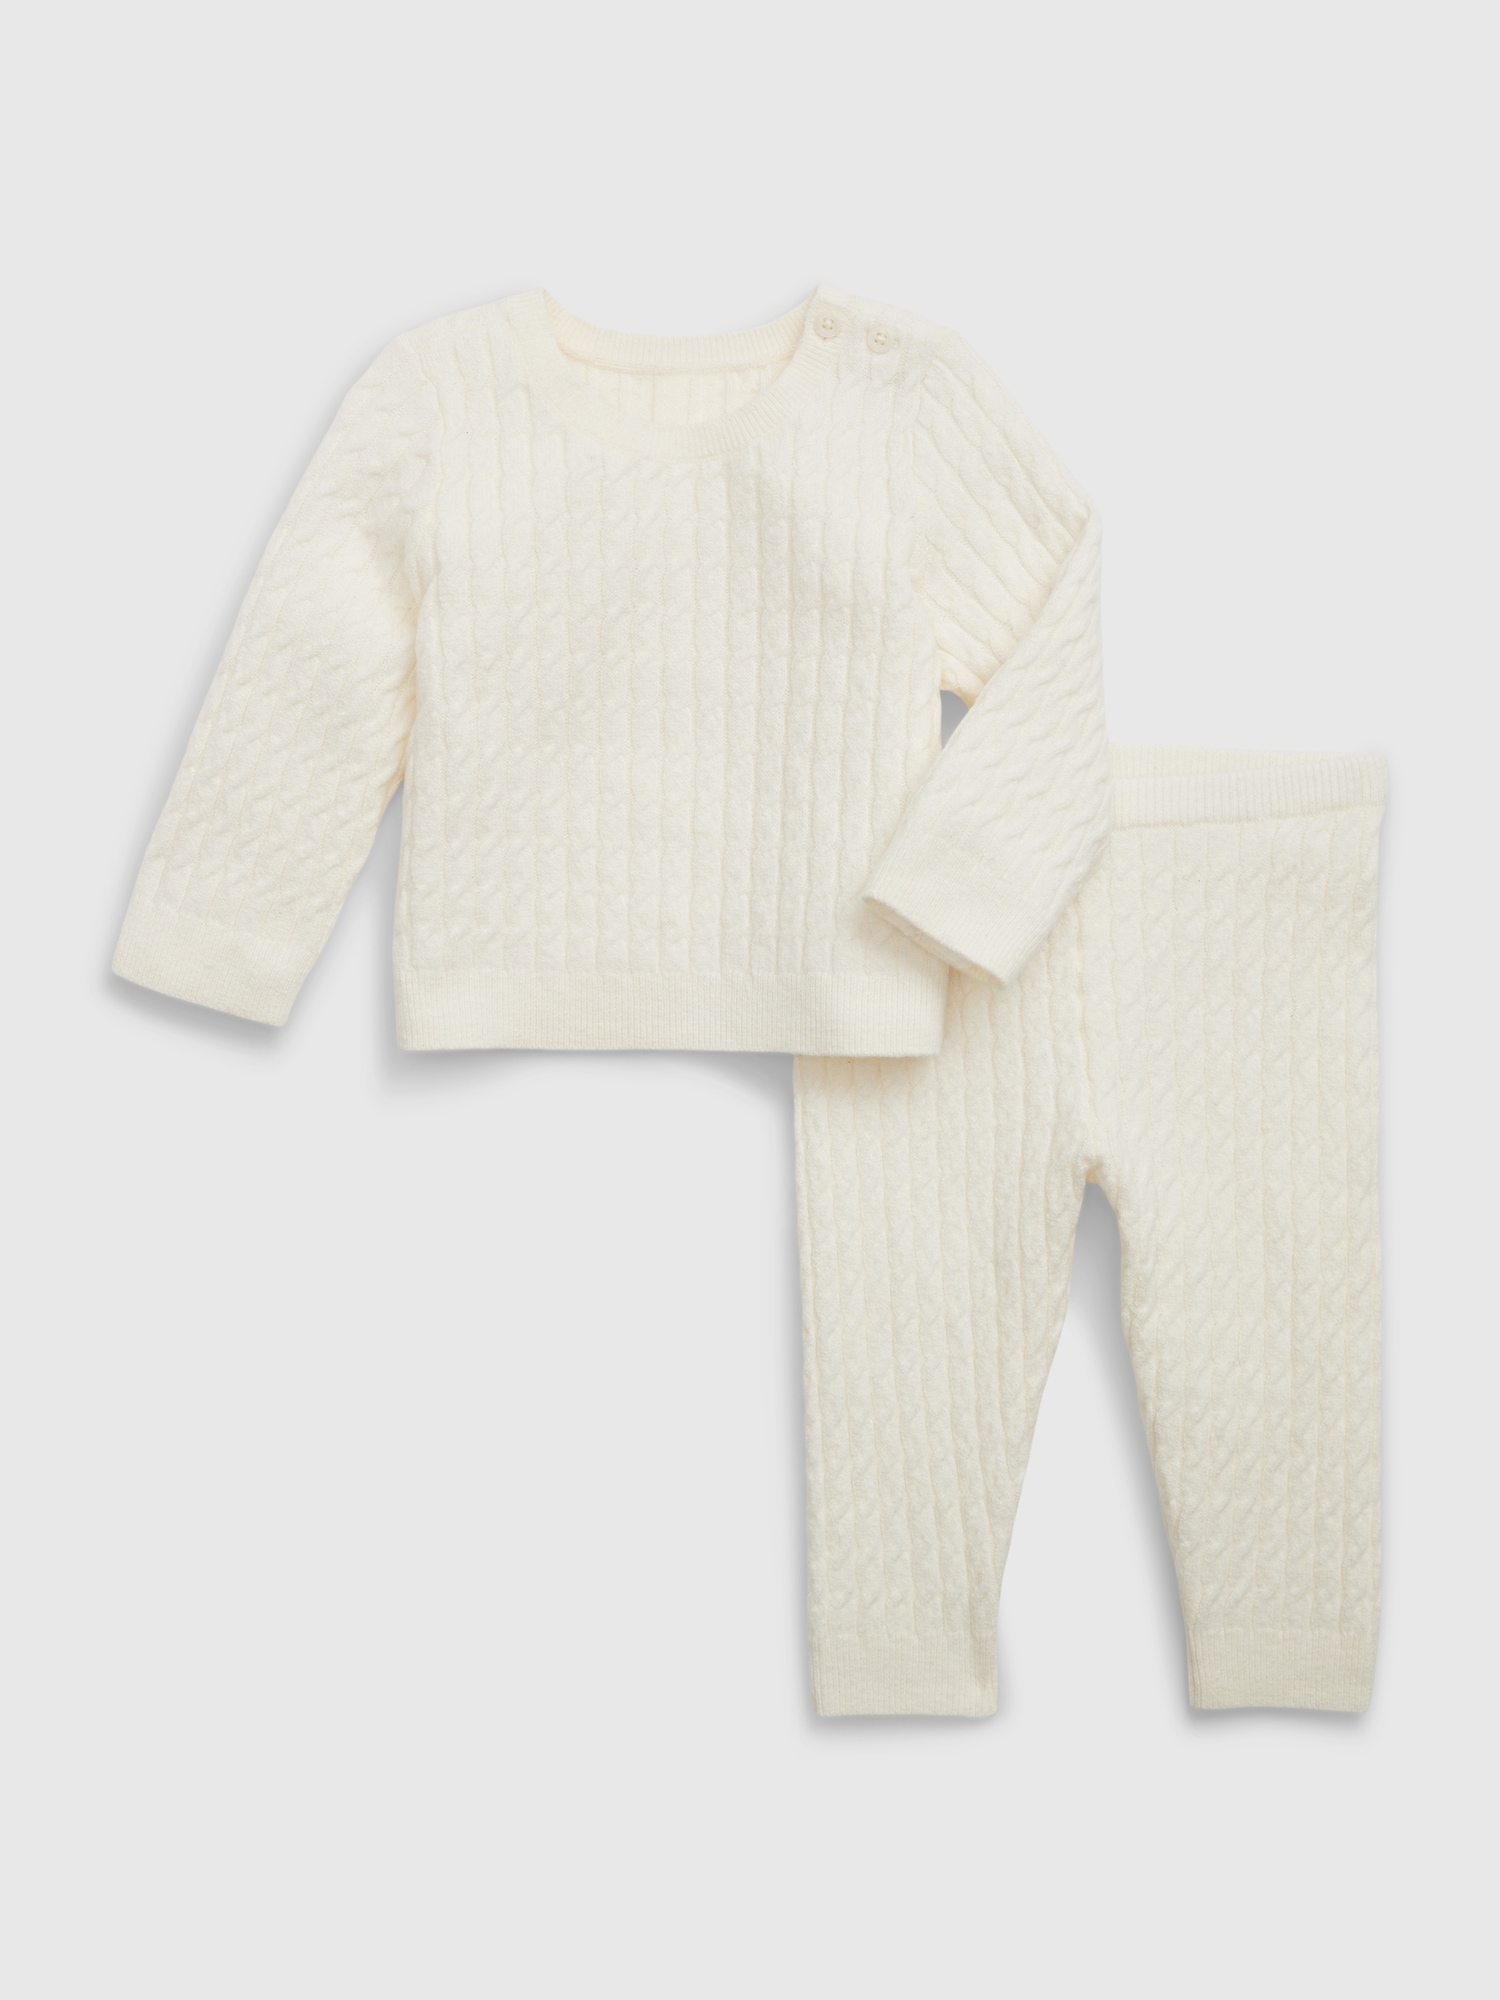 Baby CashSoft Sweater Outfit Set | Gap